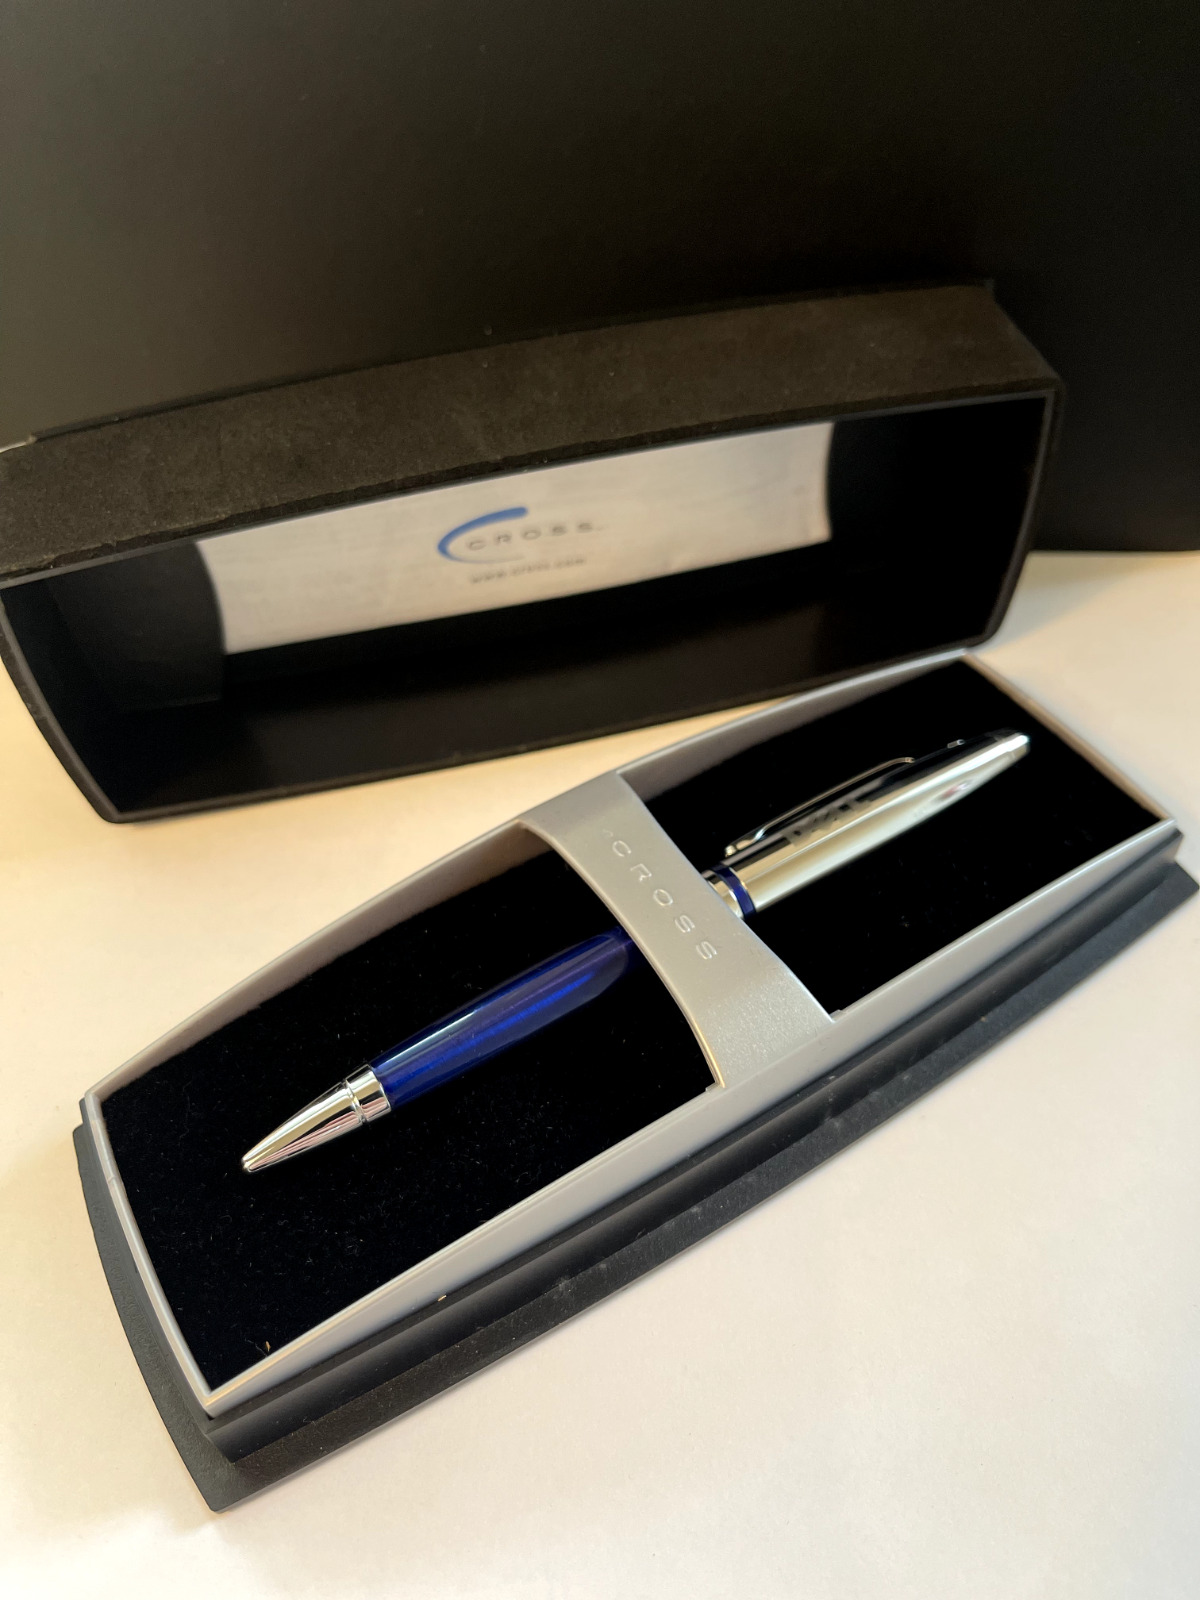 Cross Ballpoint Pen - Chrome/Blue - DELL - With Box